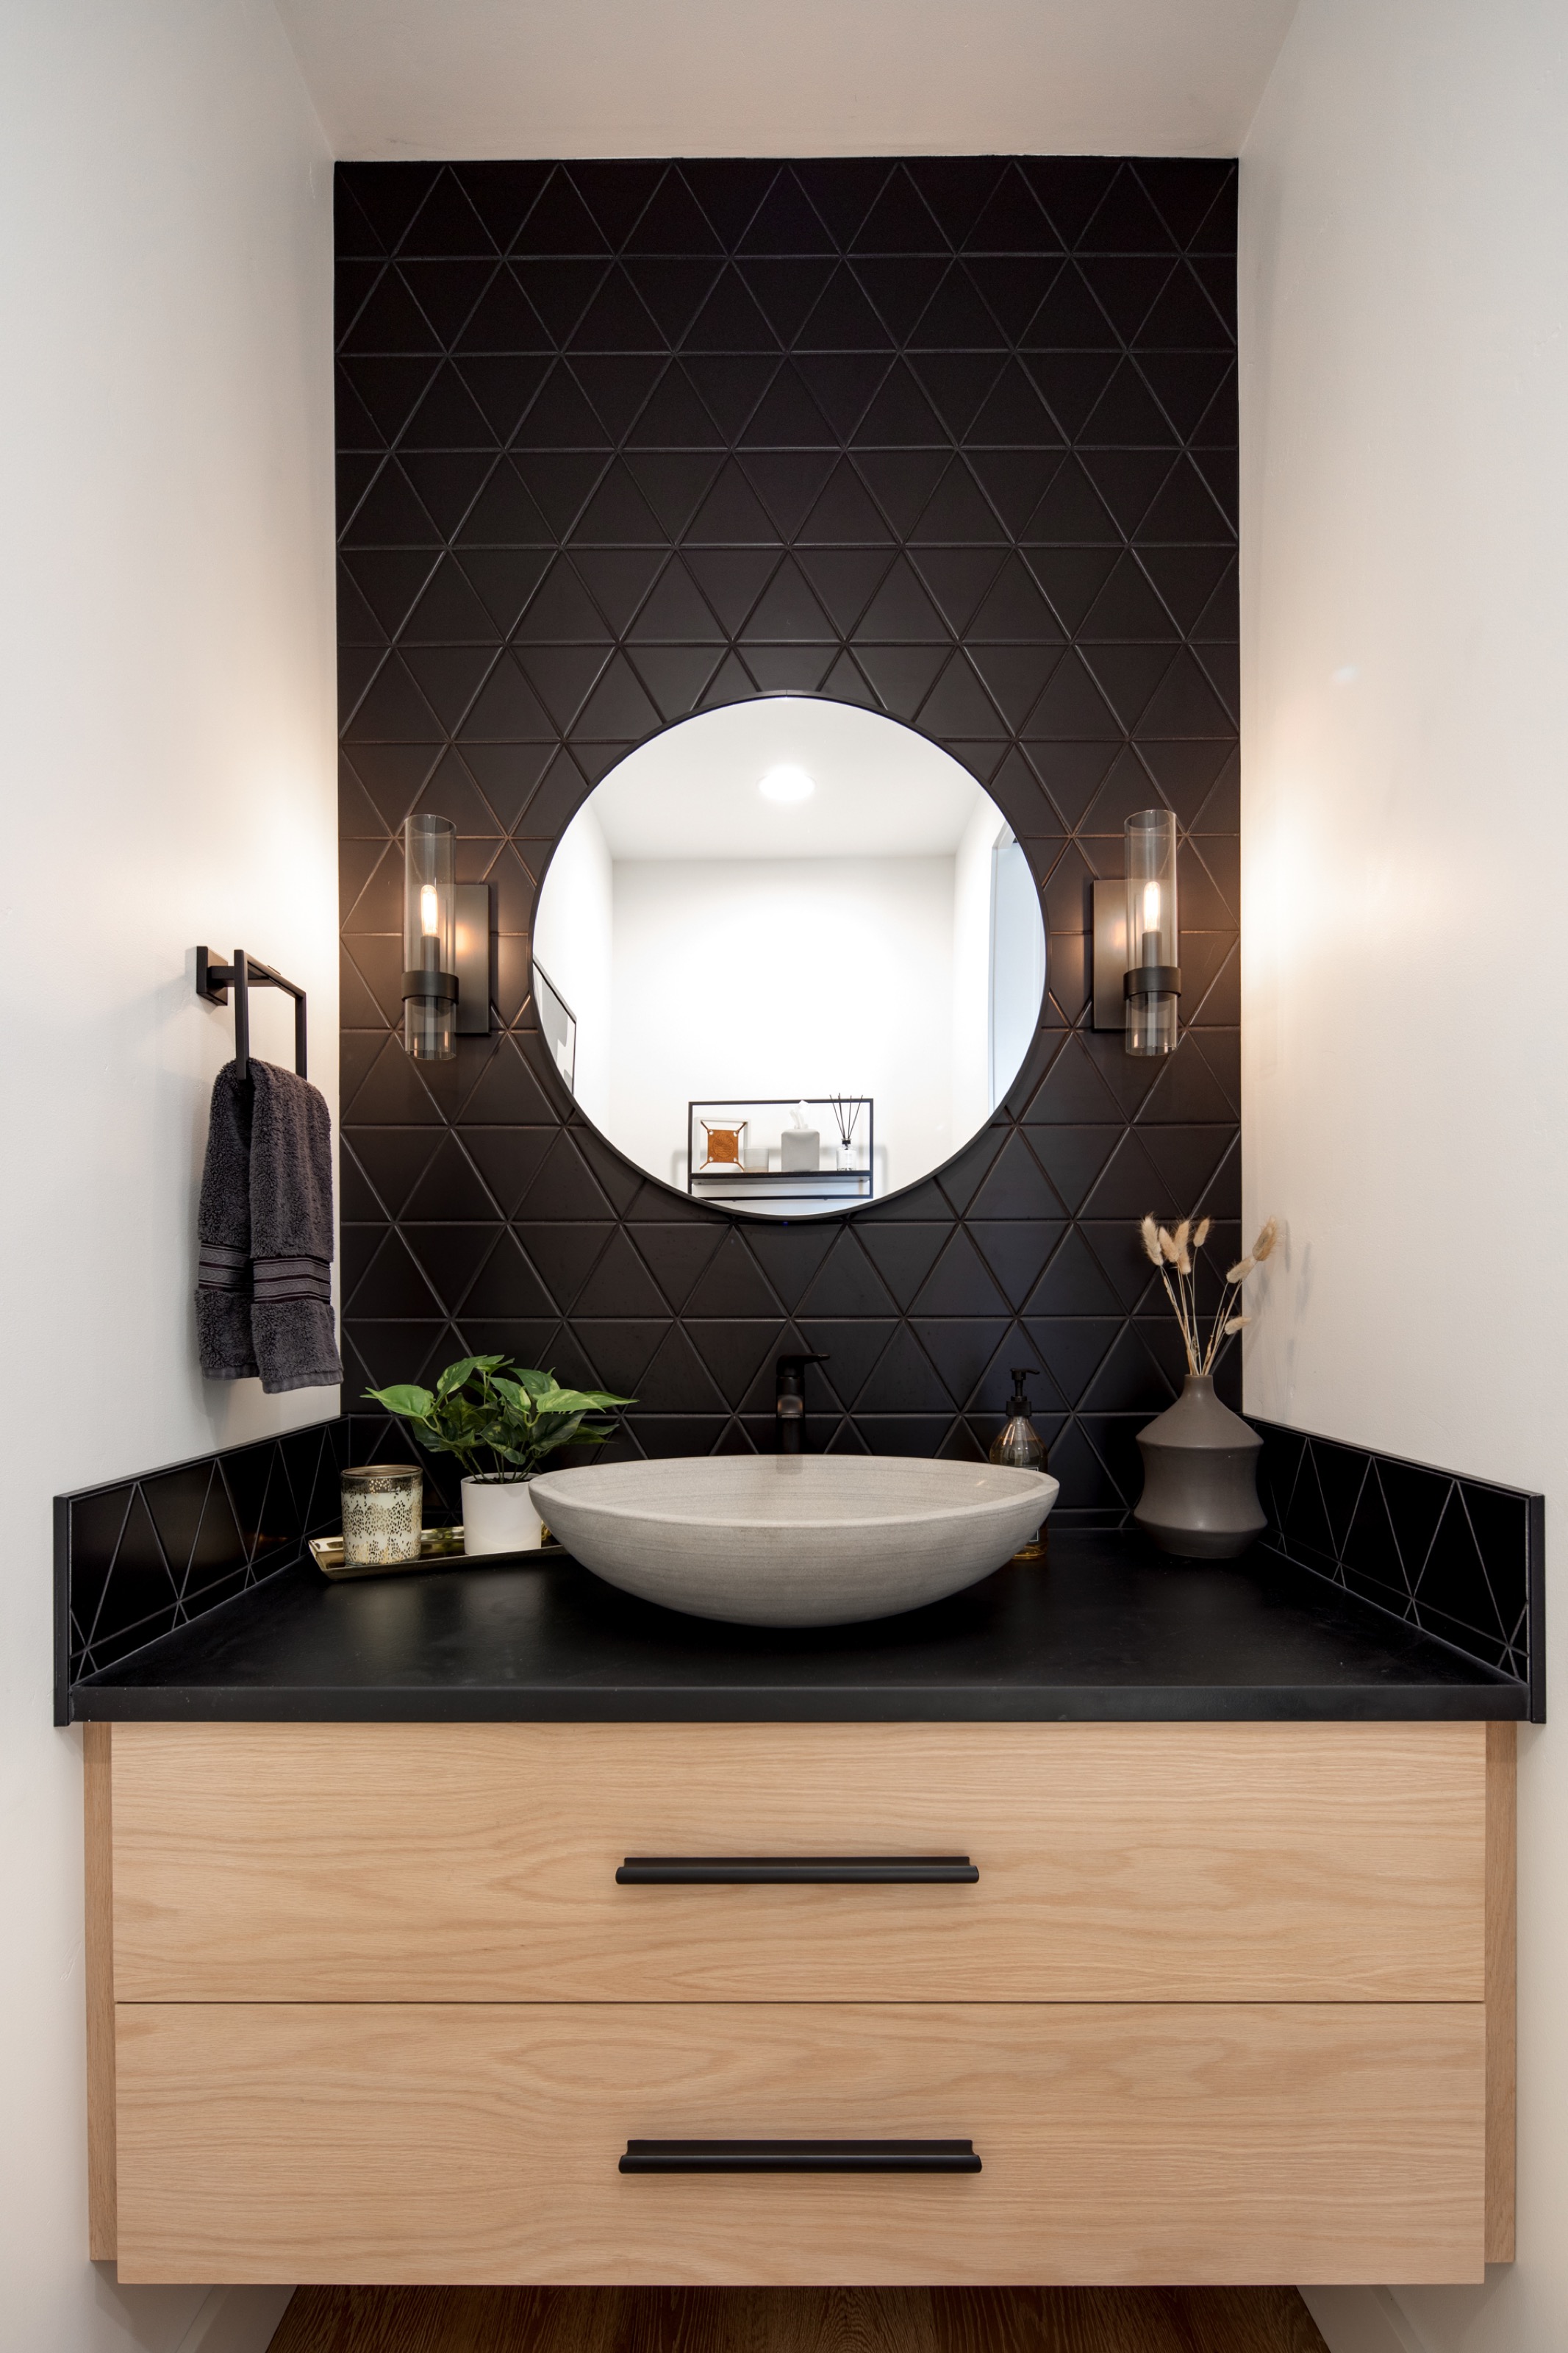 Desert modern home bathroom single vanity with black triangle tile